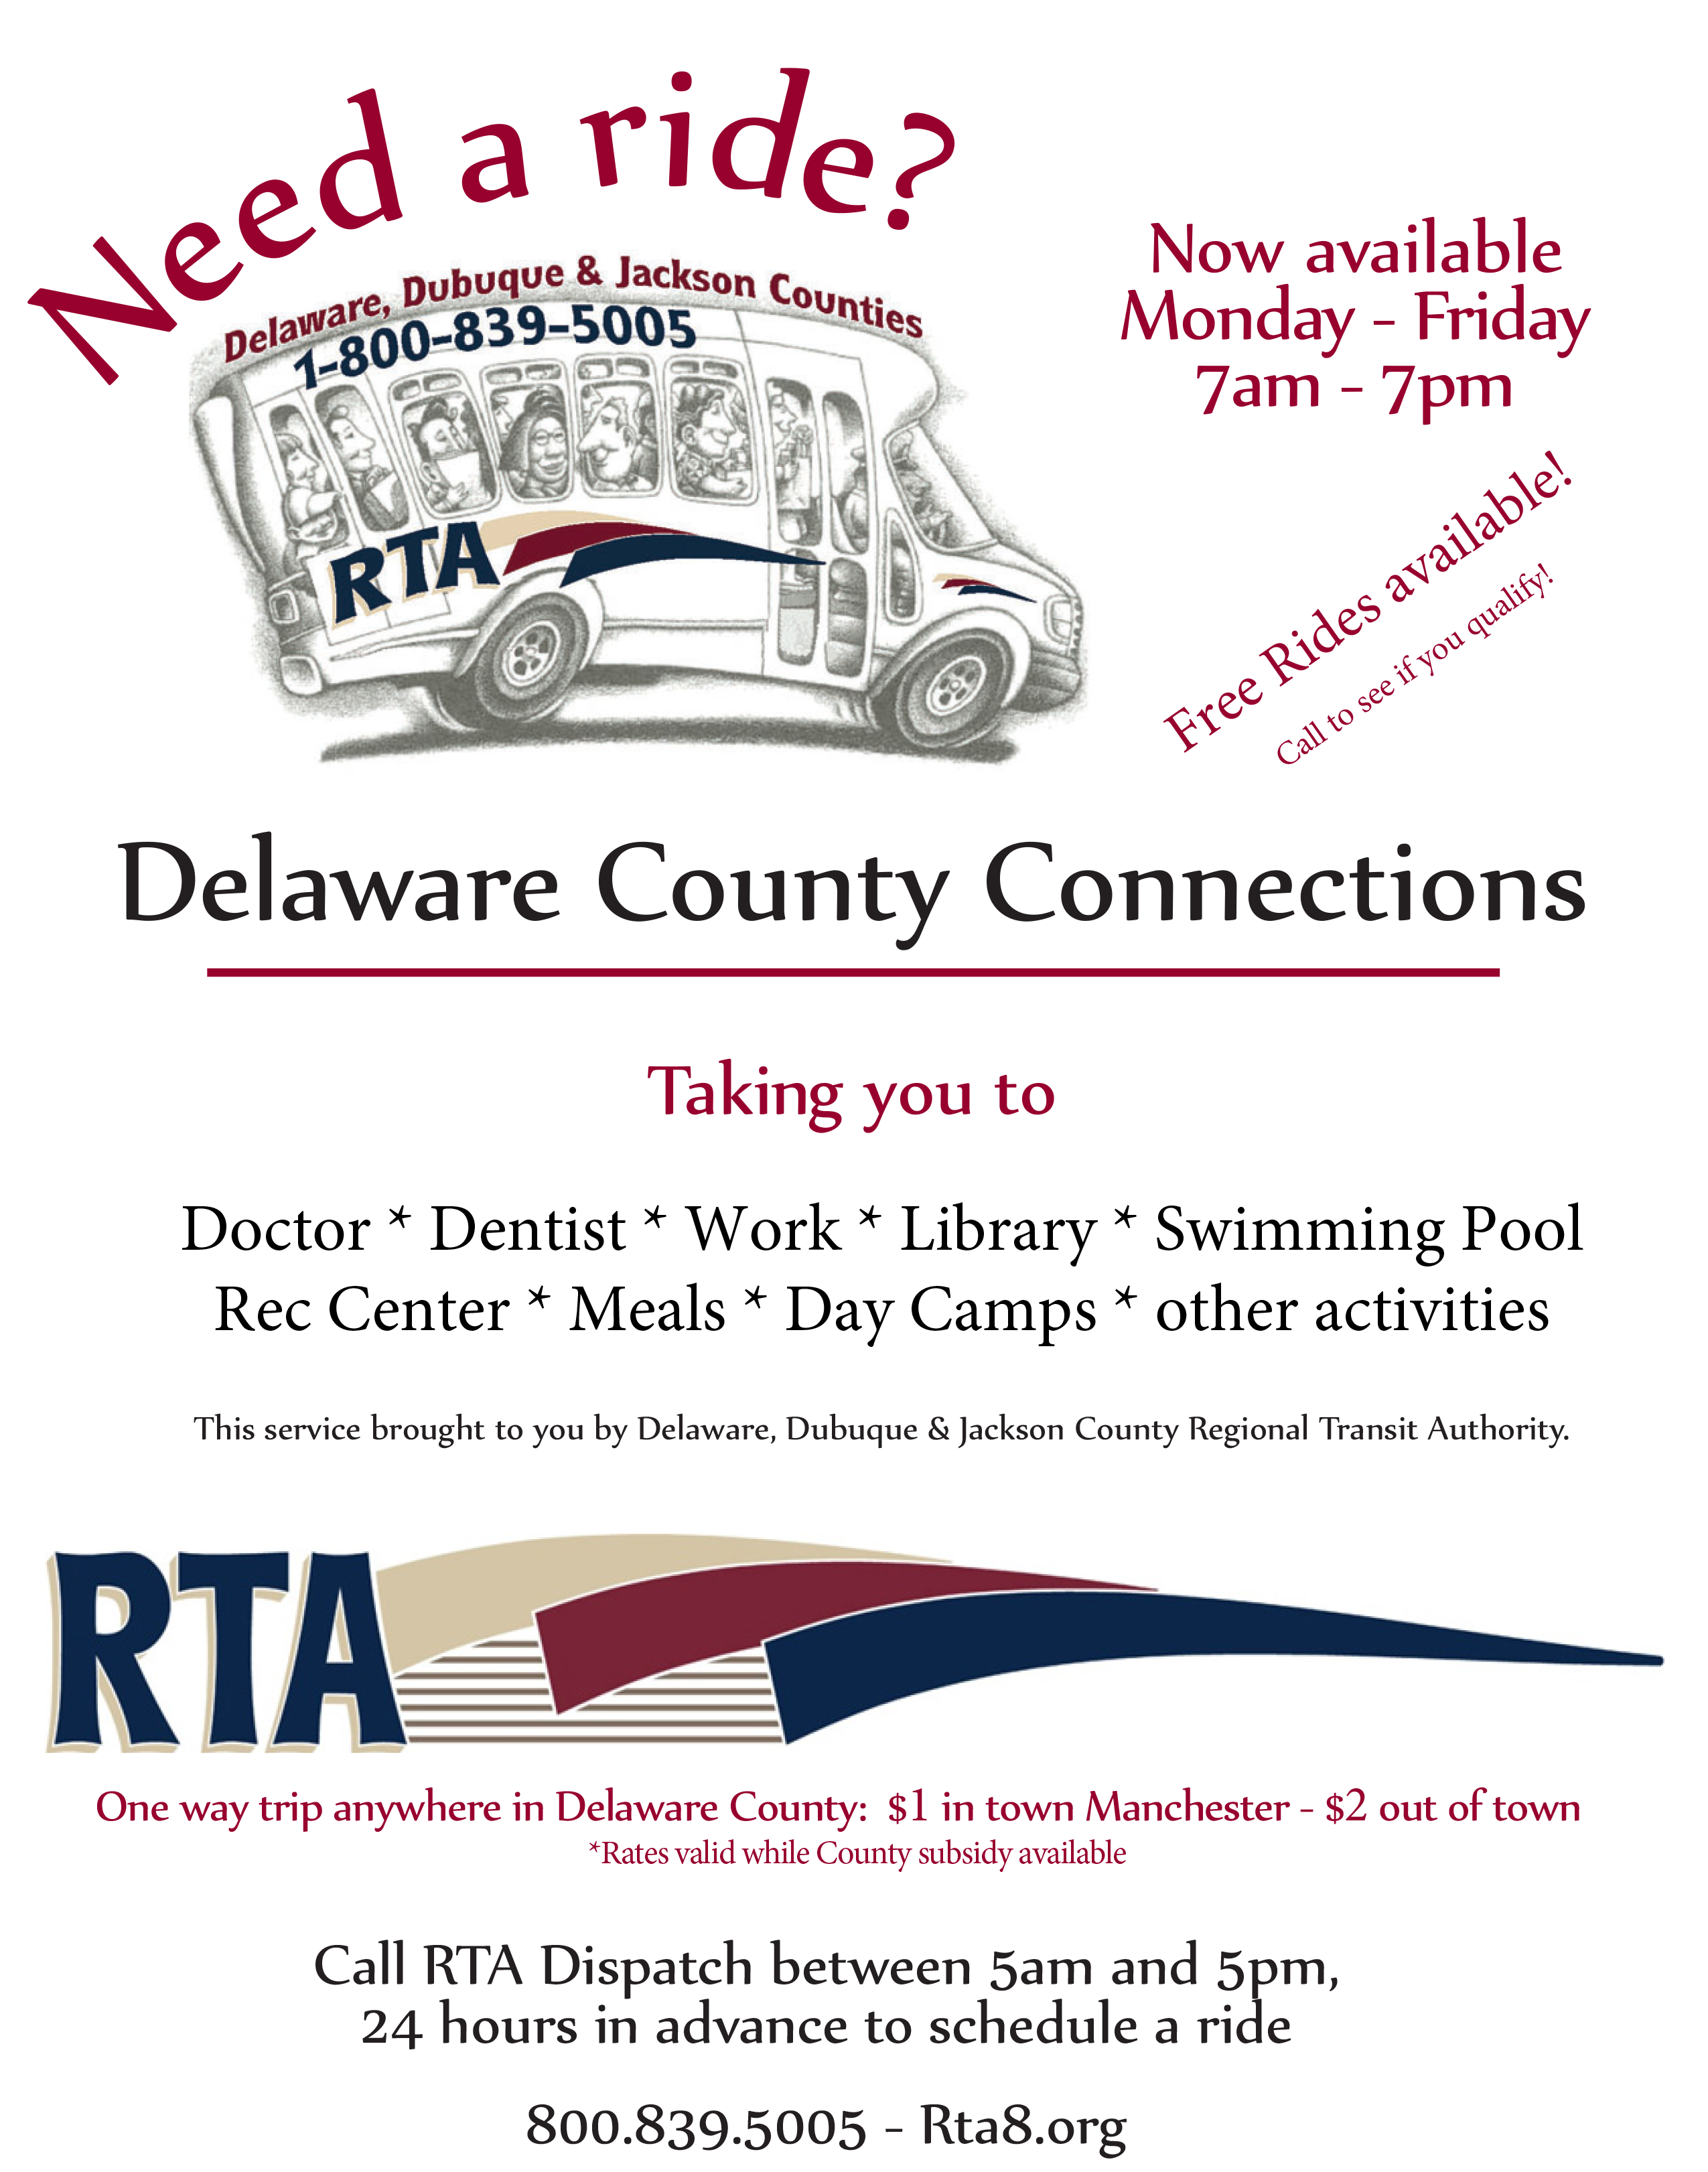 RTAFlyer-DelawareCoConnections-NoTearOff-revised.png